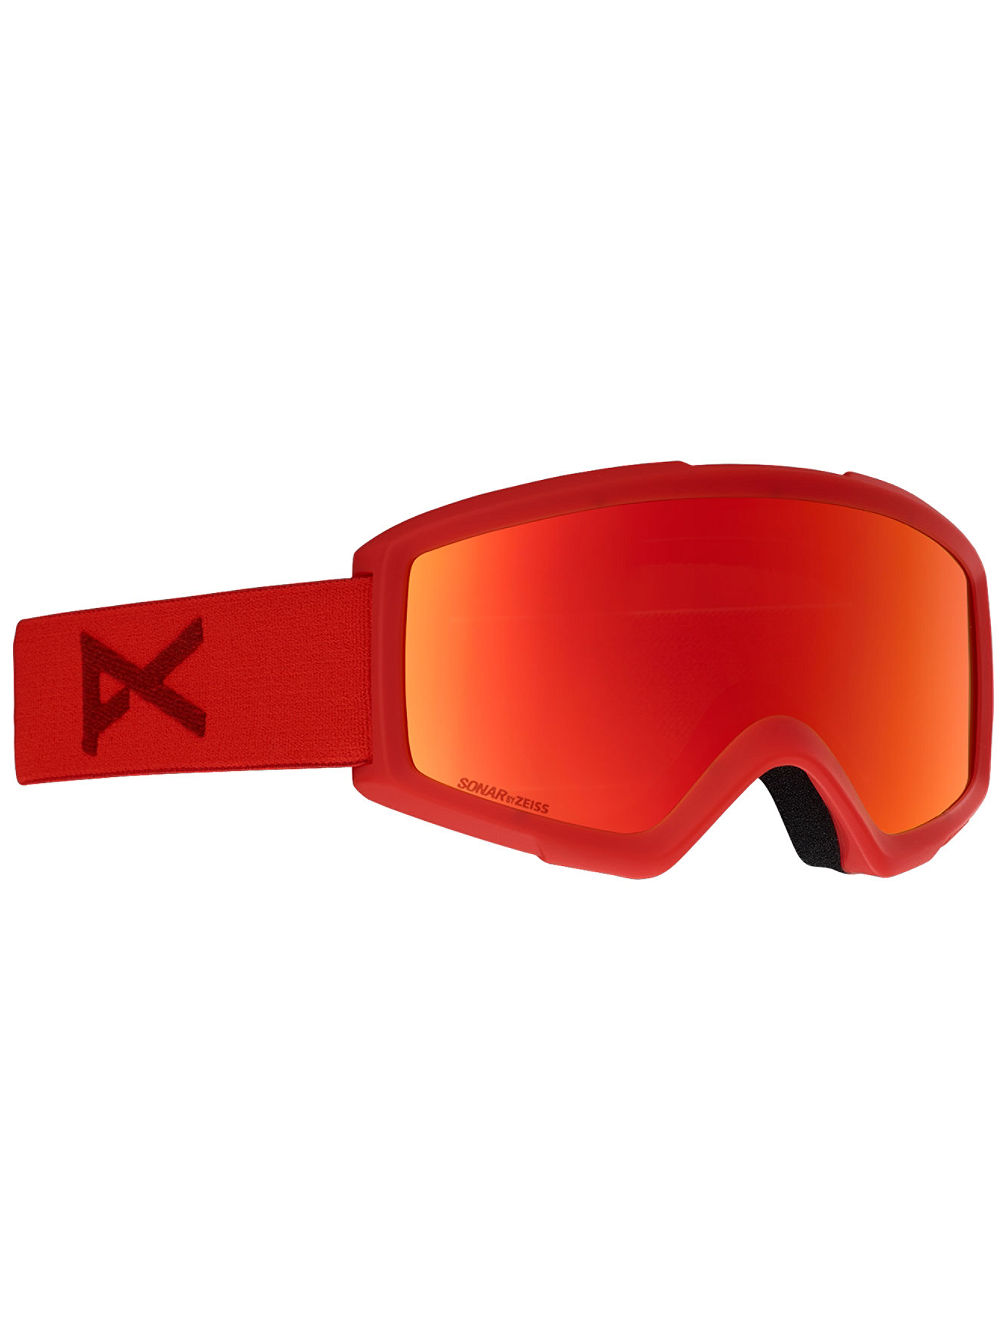 Helix 2 Sonar Red(+Bonus Lens) Goggle